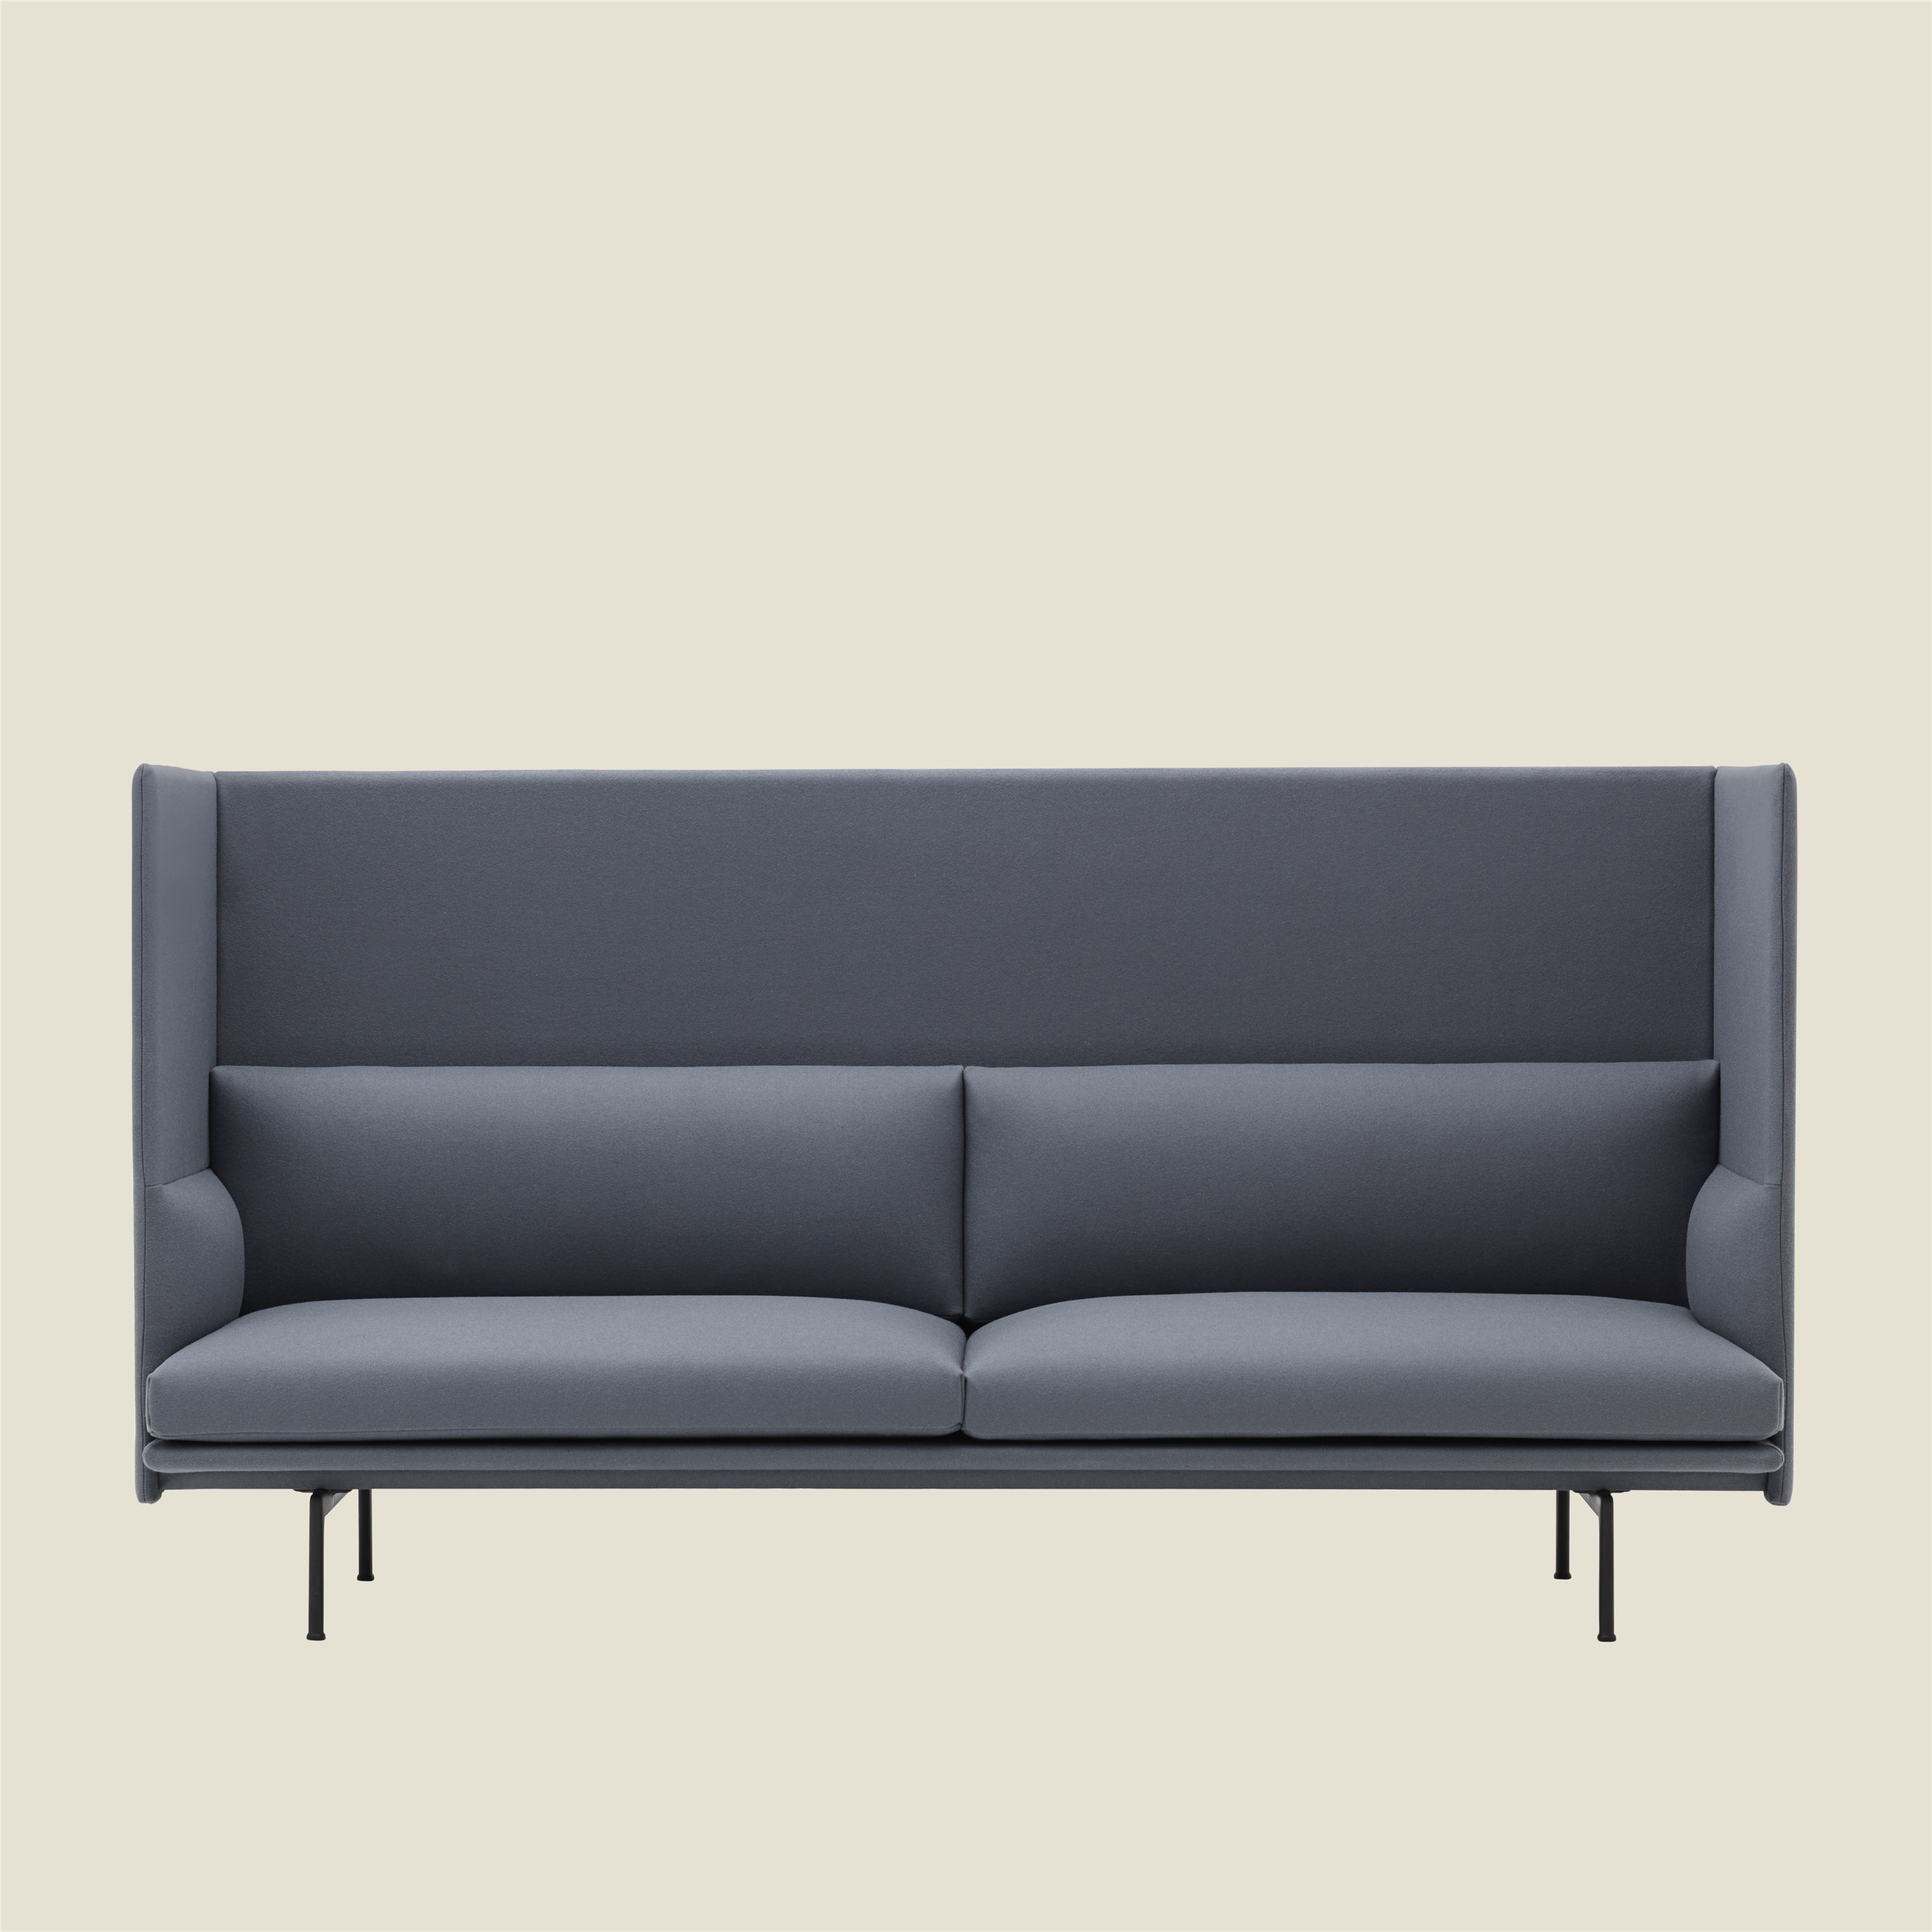 Outline high back 3 seater, Muuto sofa, modern furniture, scandinavian design, interiors.jpg